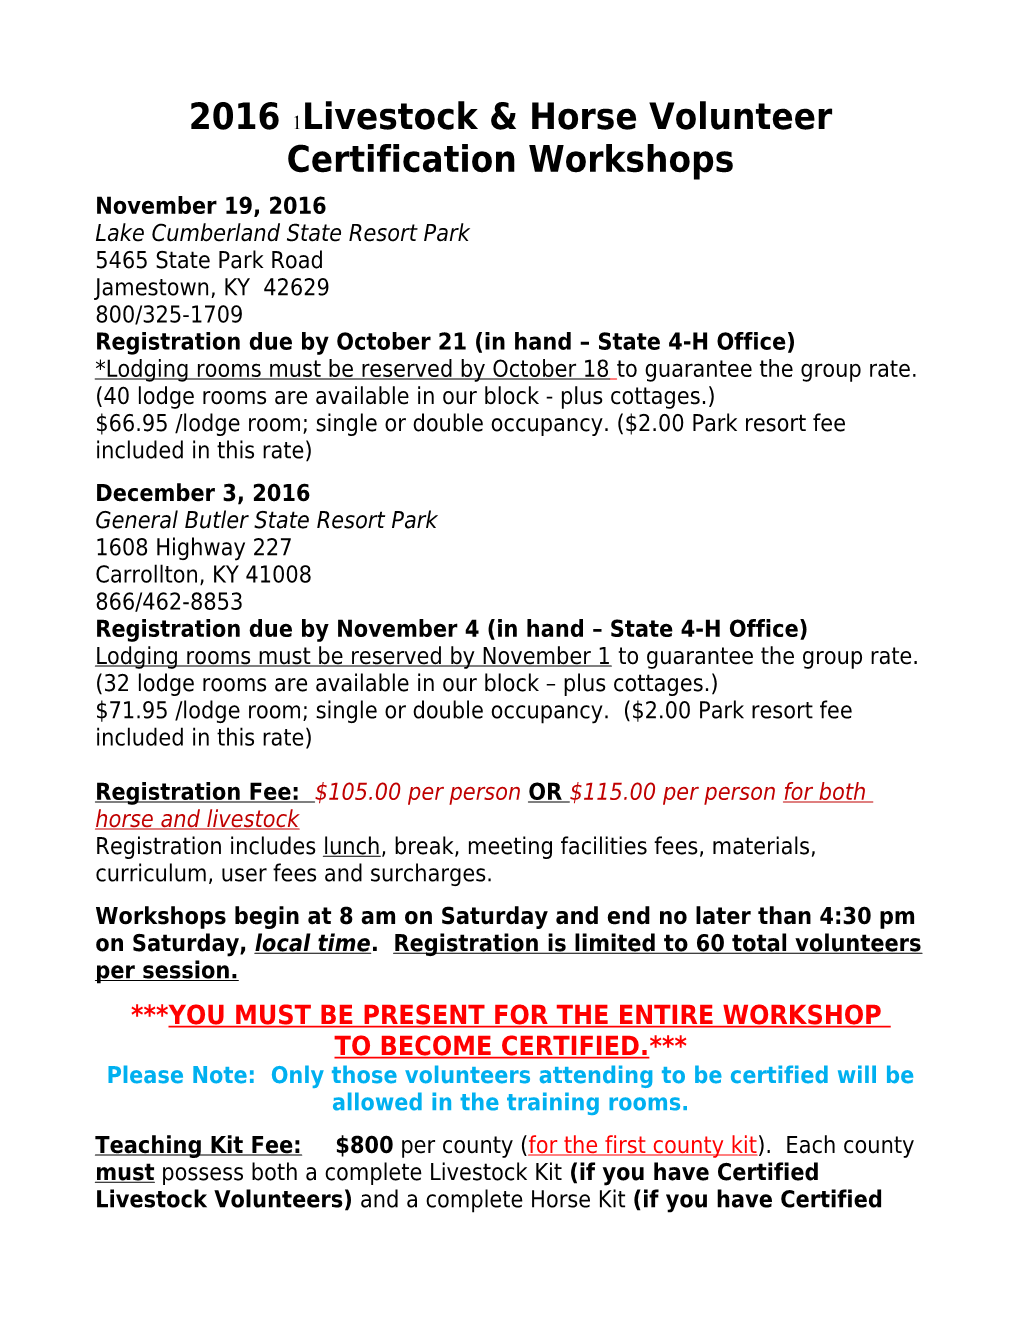 Livestock Volunteer Certification Workshop